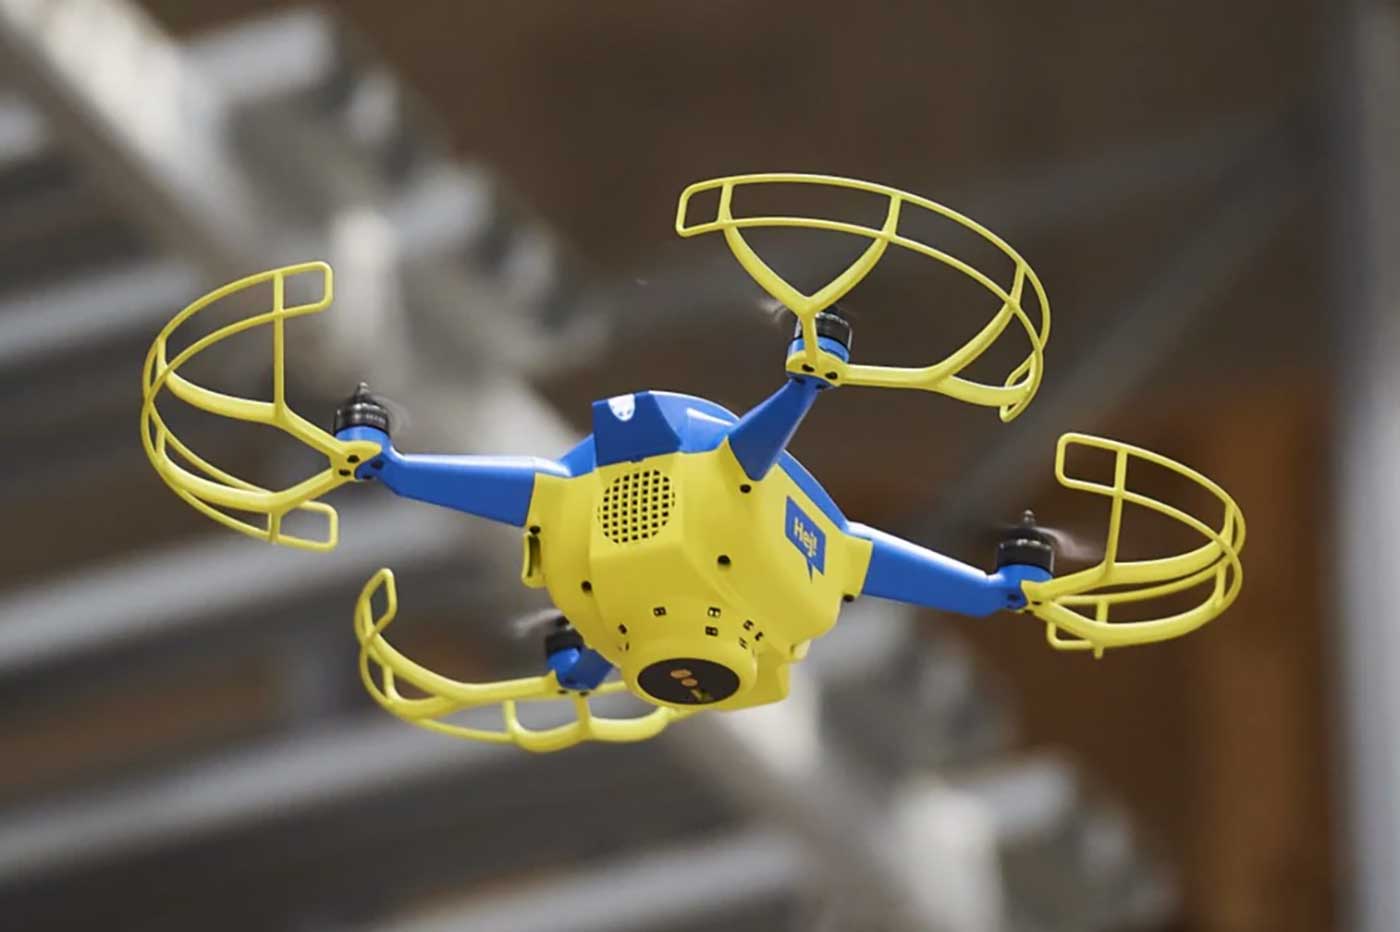 IKEA drone